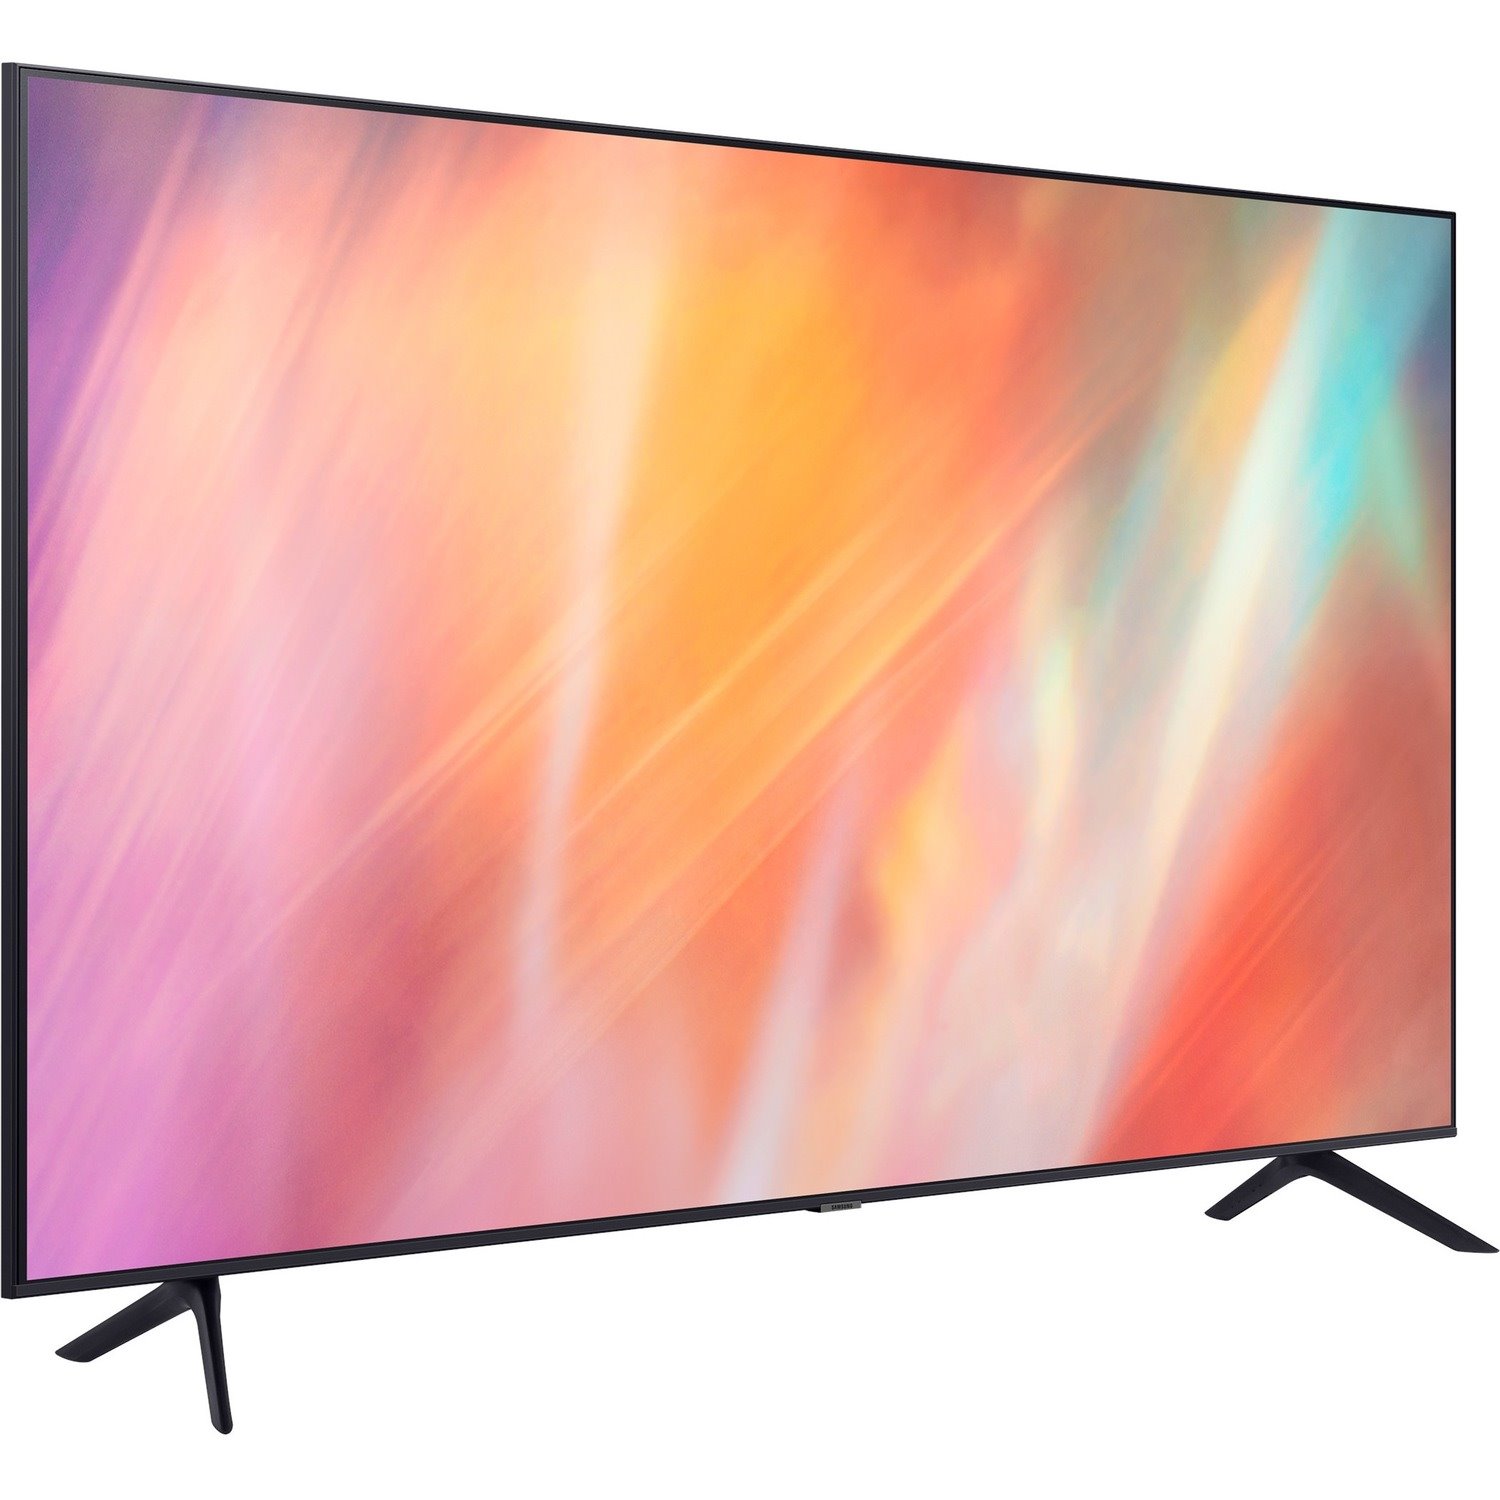 Samsung LH50BEAHLGW 50" Smart LED-LCD TV - 4K UHDTV - Titan Gray